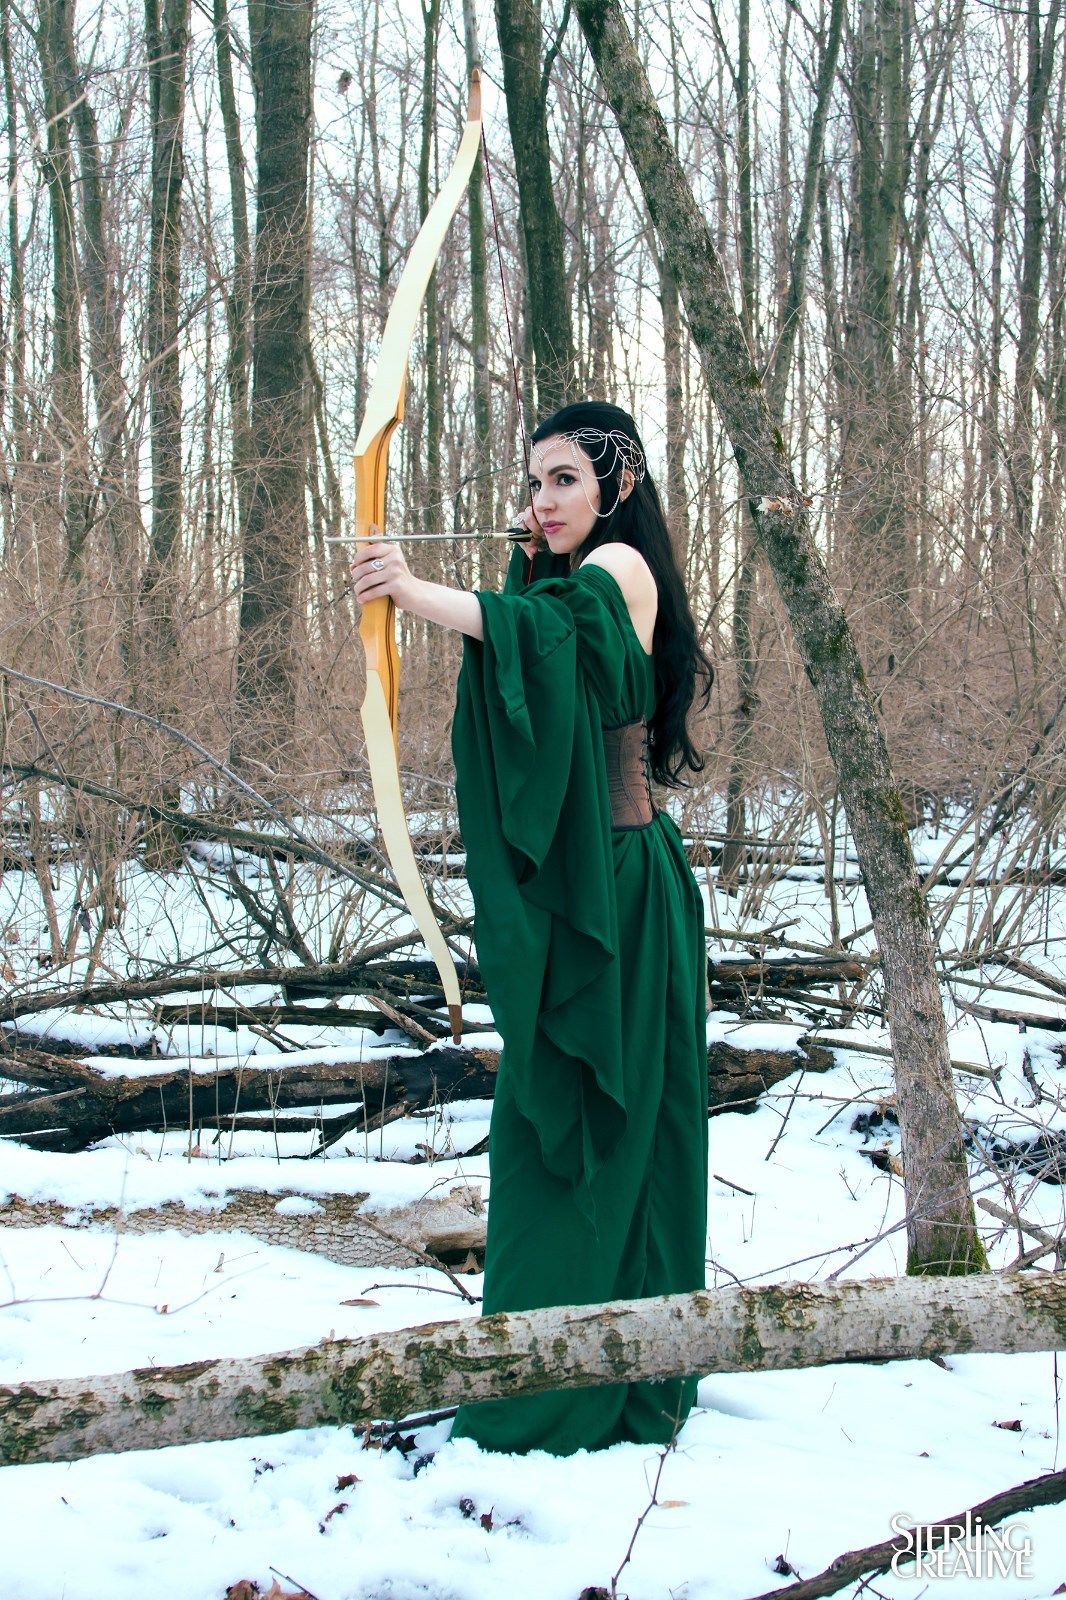 Renaissance women Costume Medieval Fantasy Cosplay Gown Dress "The Archeress" Reminisce Brand